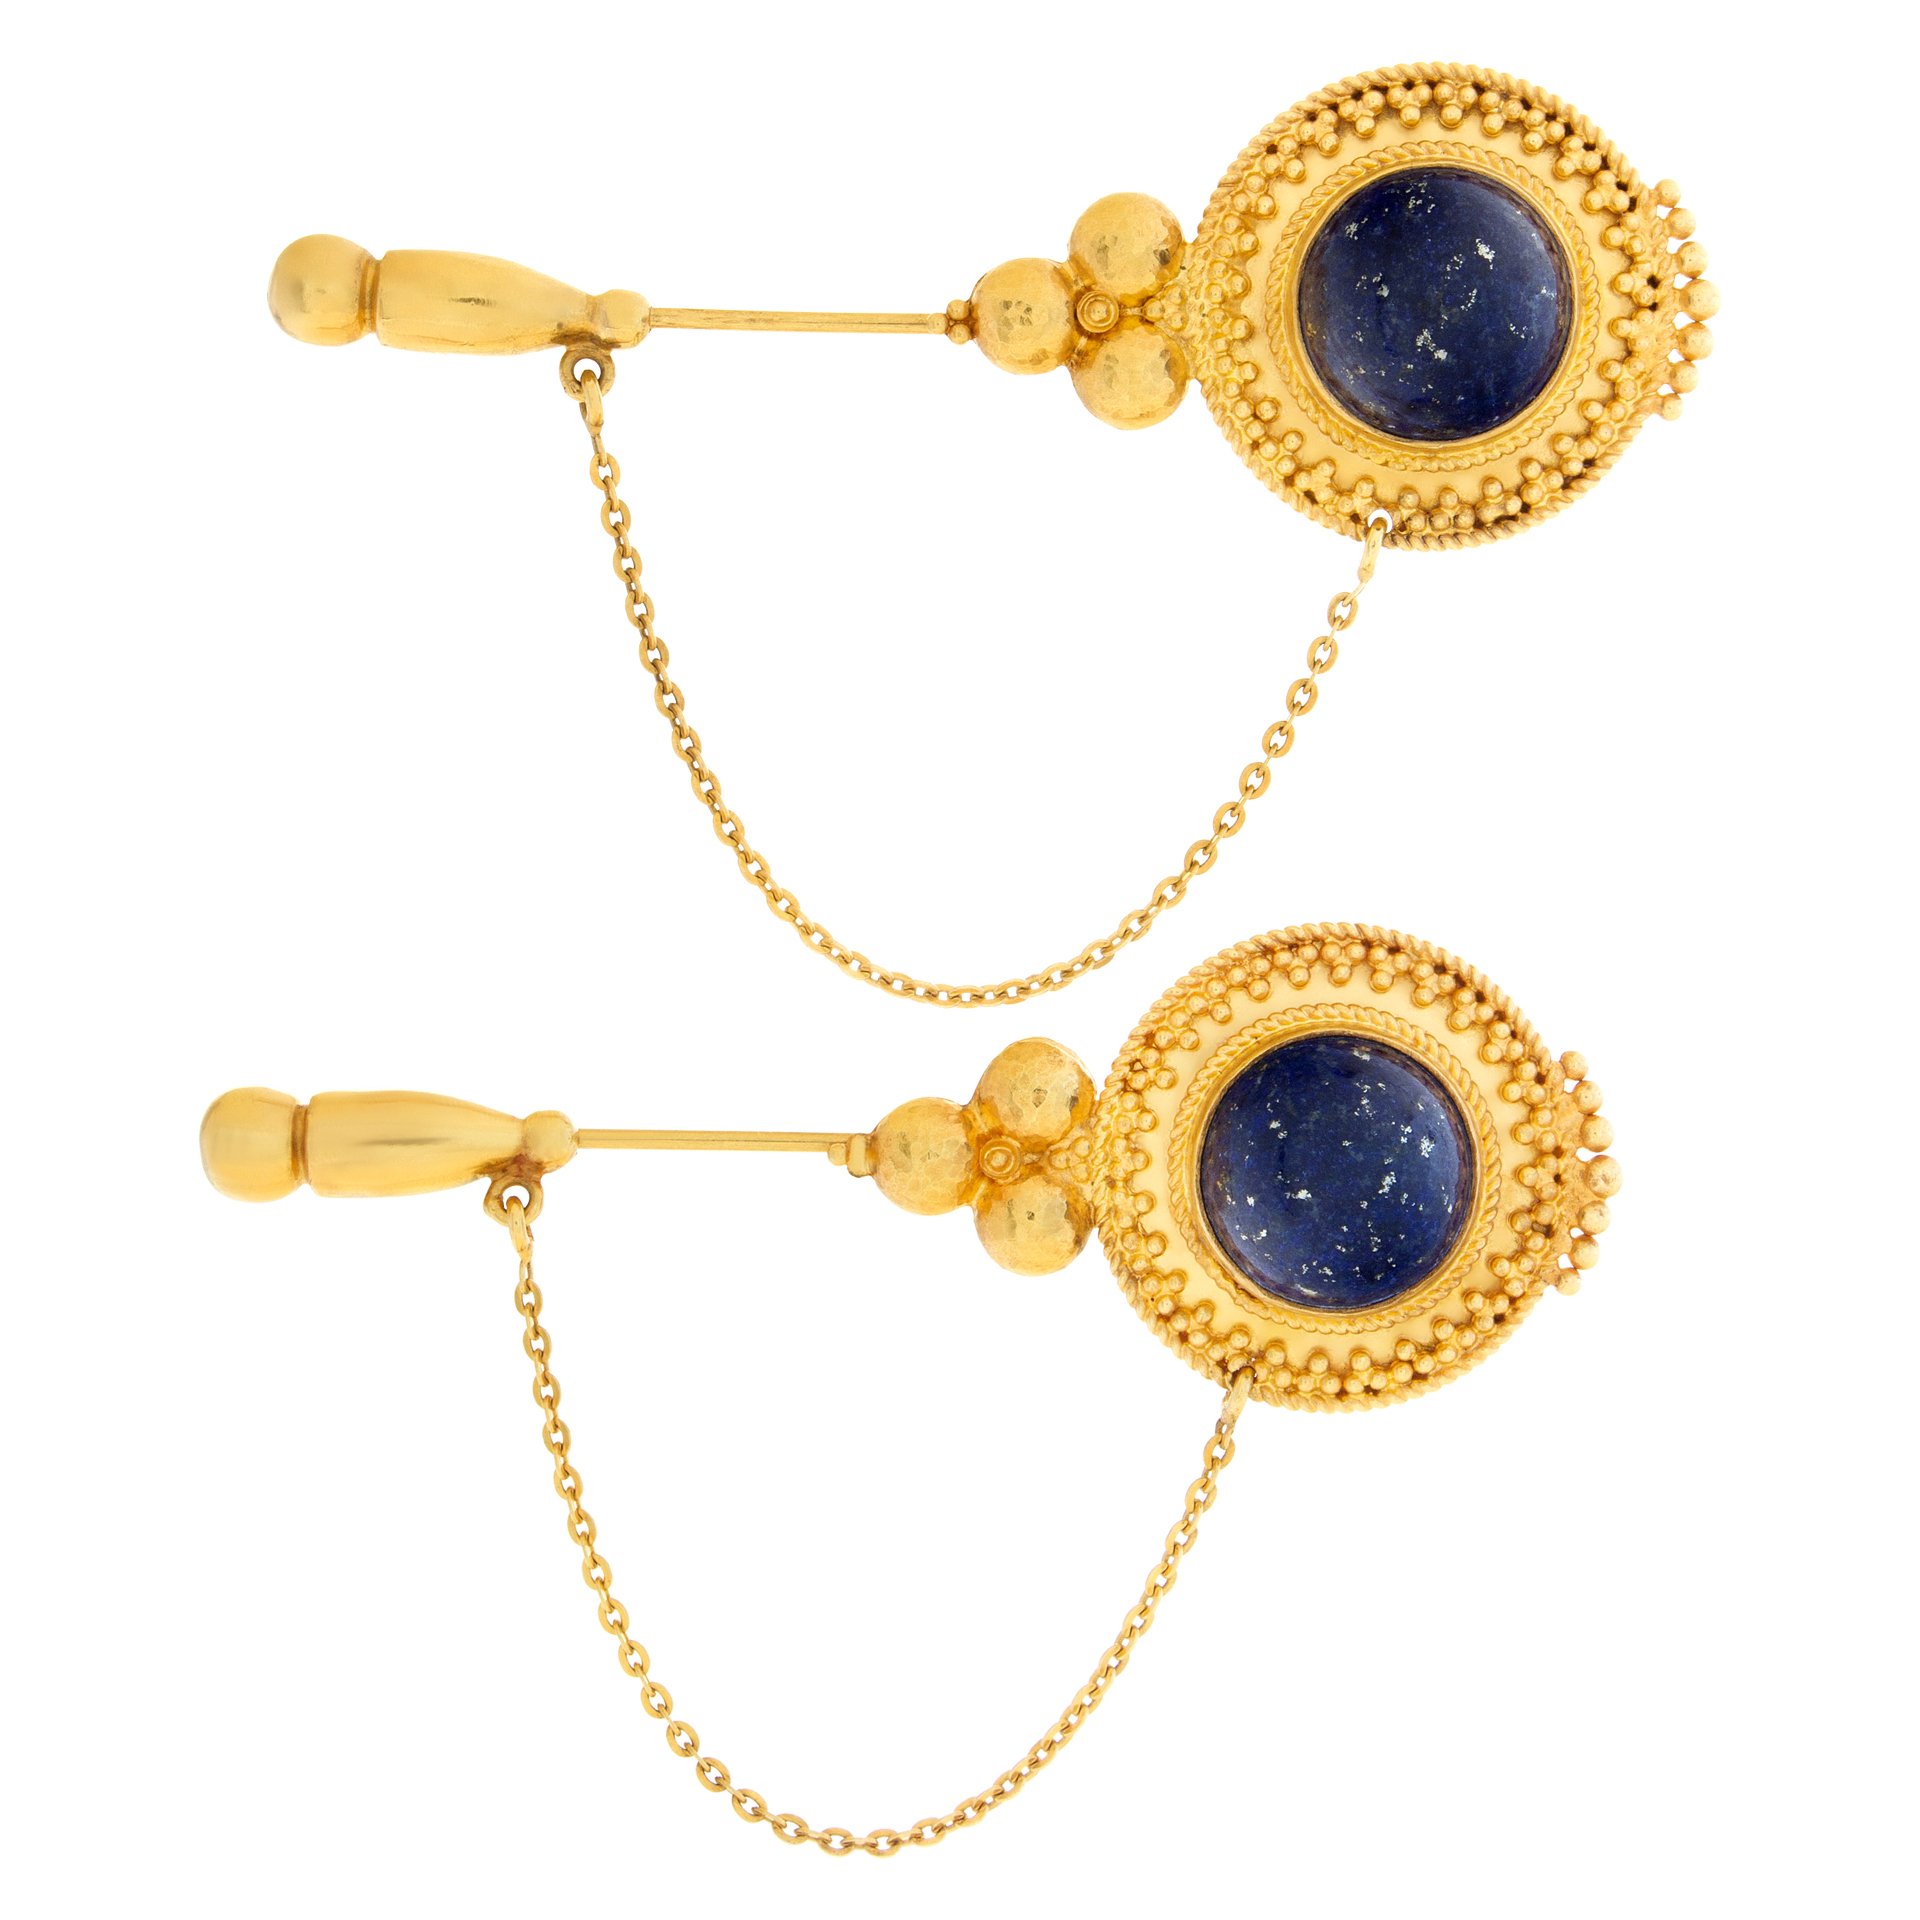 Victorian Etruscan Revival pair of cabochon Lapis Lazuli lapel/jabot pins, set in 18k yellow gold.